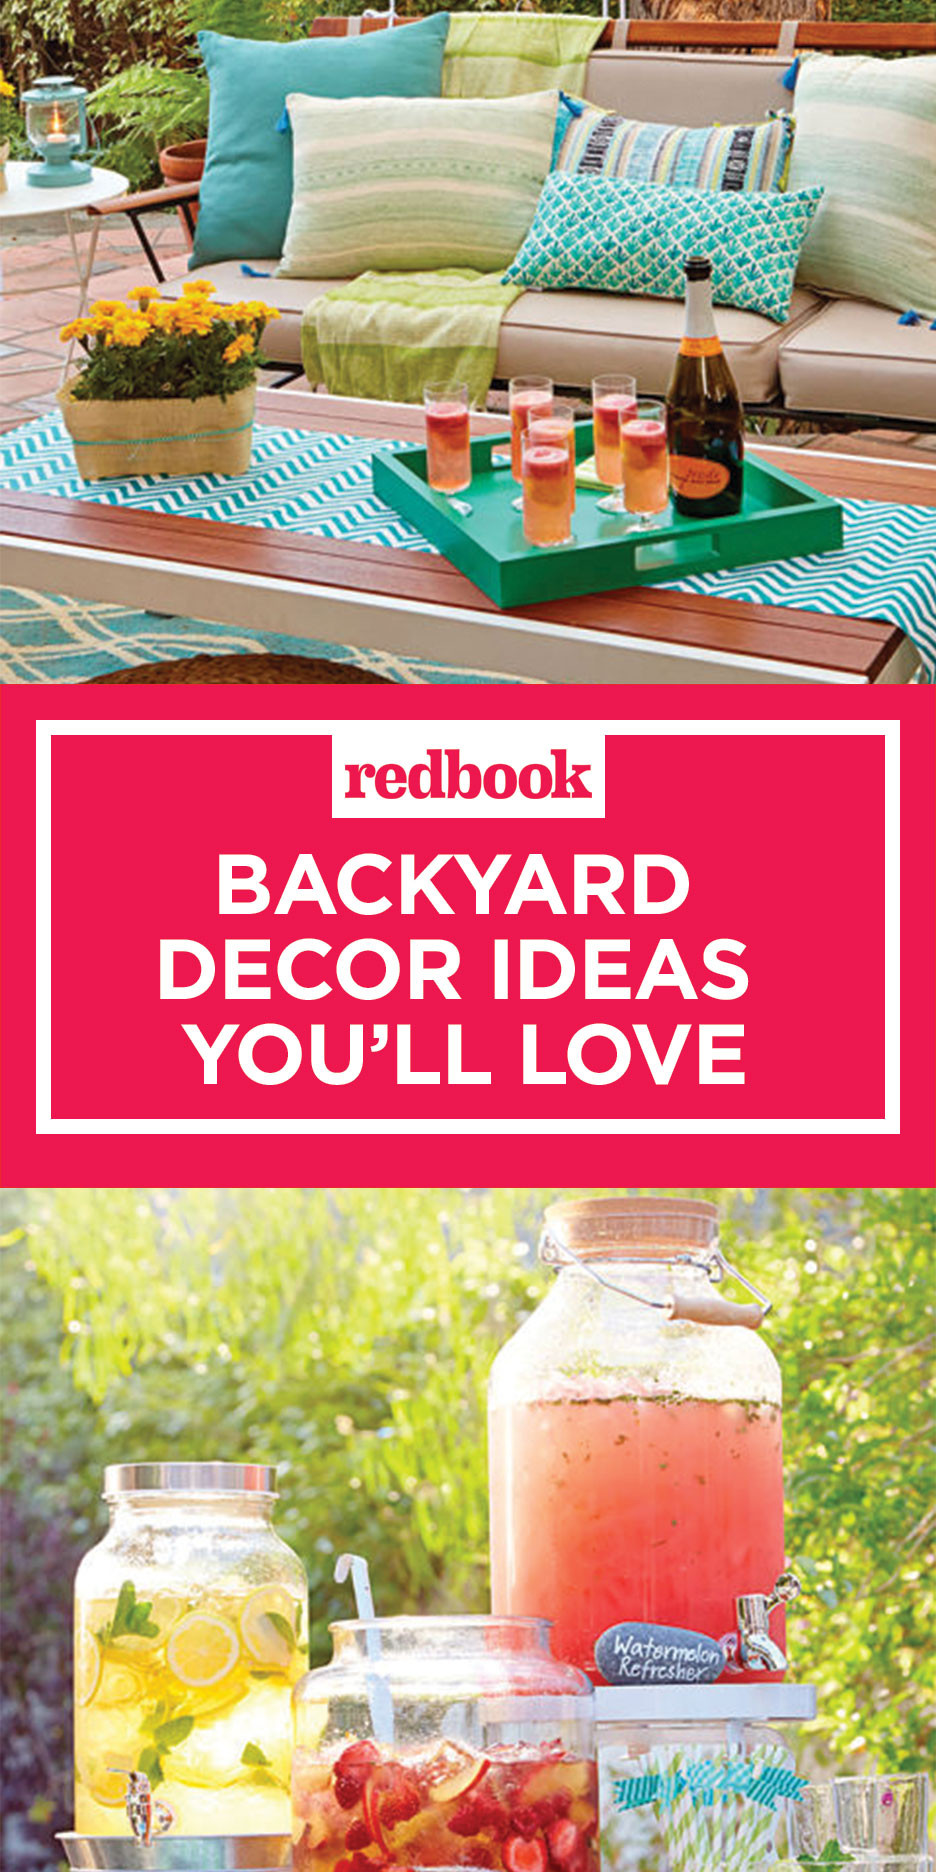 Backyard Birthday Party Ideas
 14 Best Backyard Party Ideas for Adults Summer